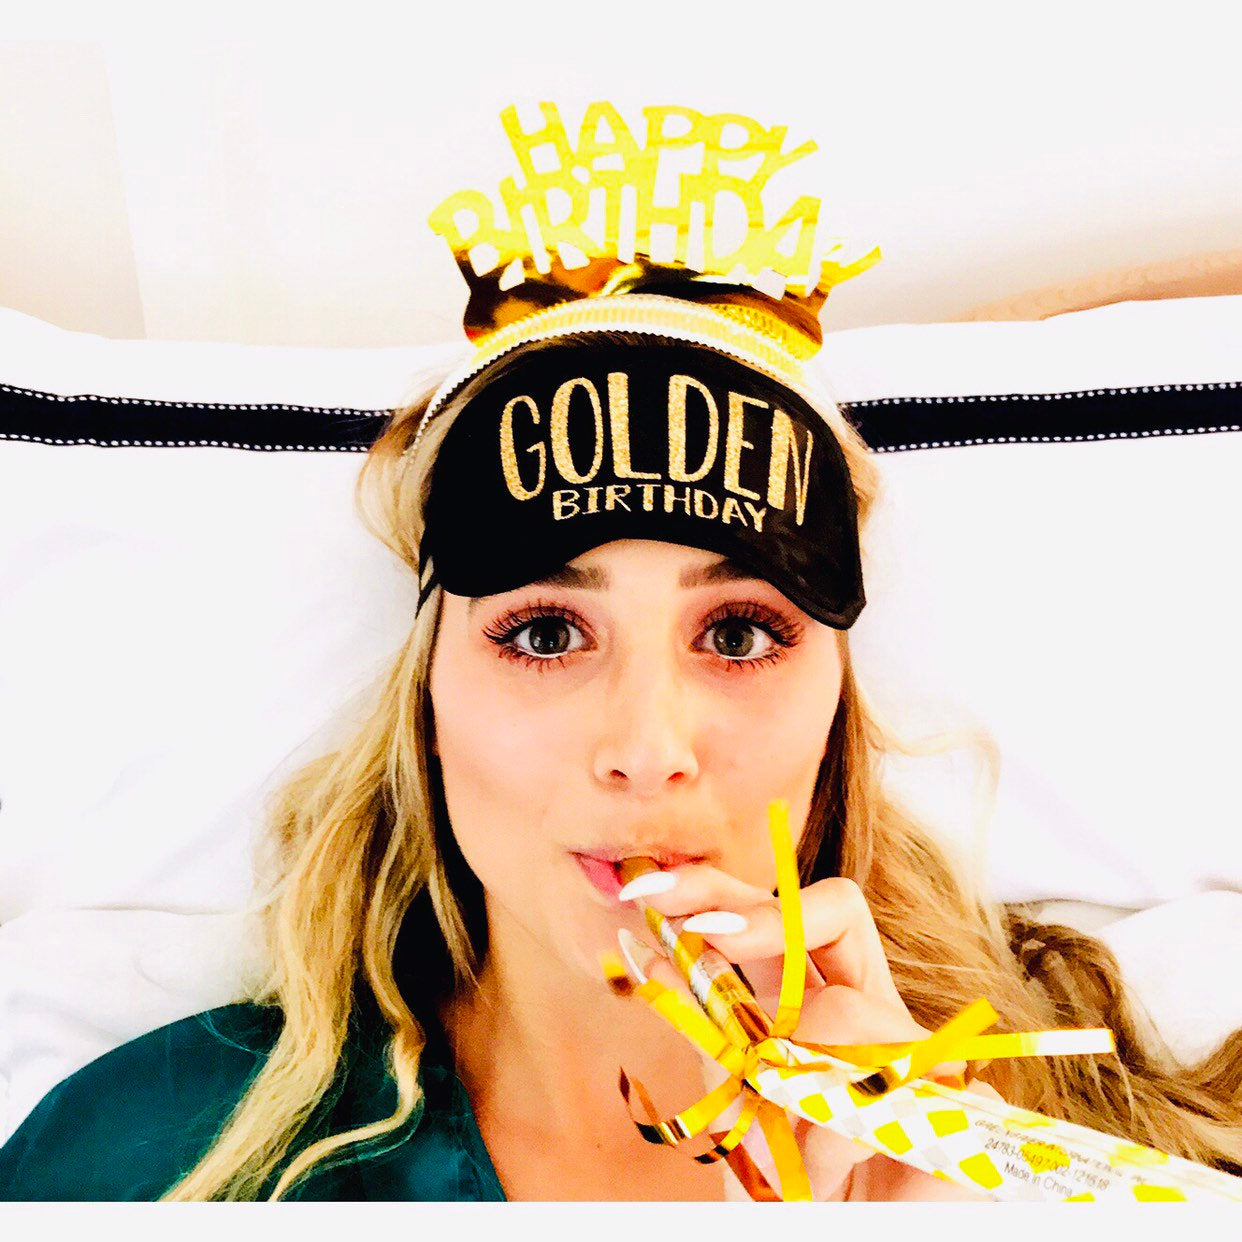 Glitter Golden Birthday Sleep Mask! Great Birthday Party Gift. Perfect Birthday Girl gift! Golden Birthday Gift. Golden Birthday Party Favor